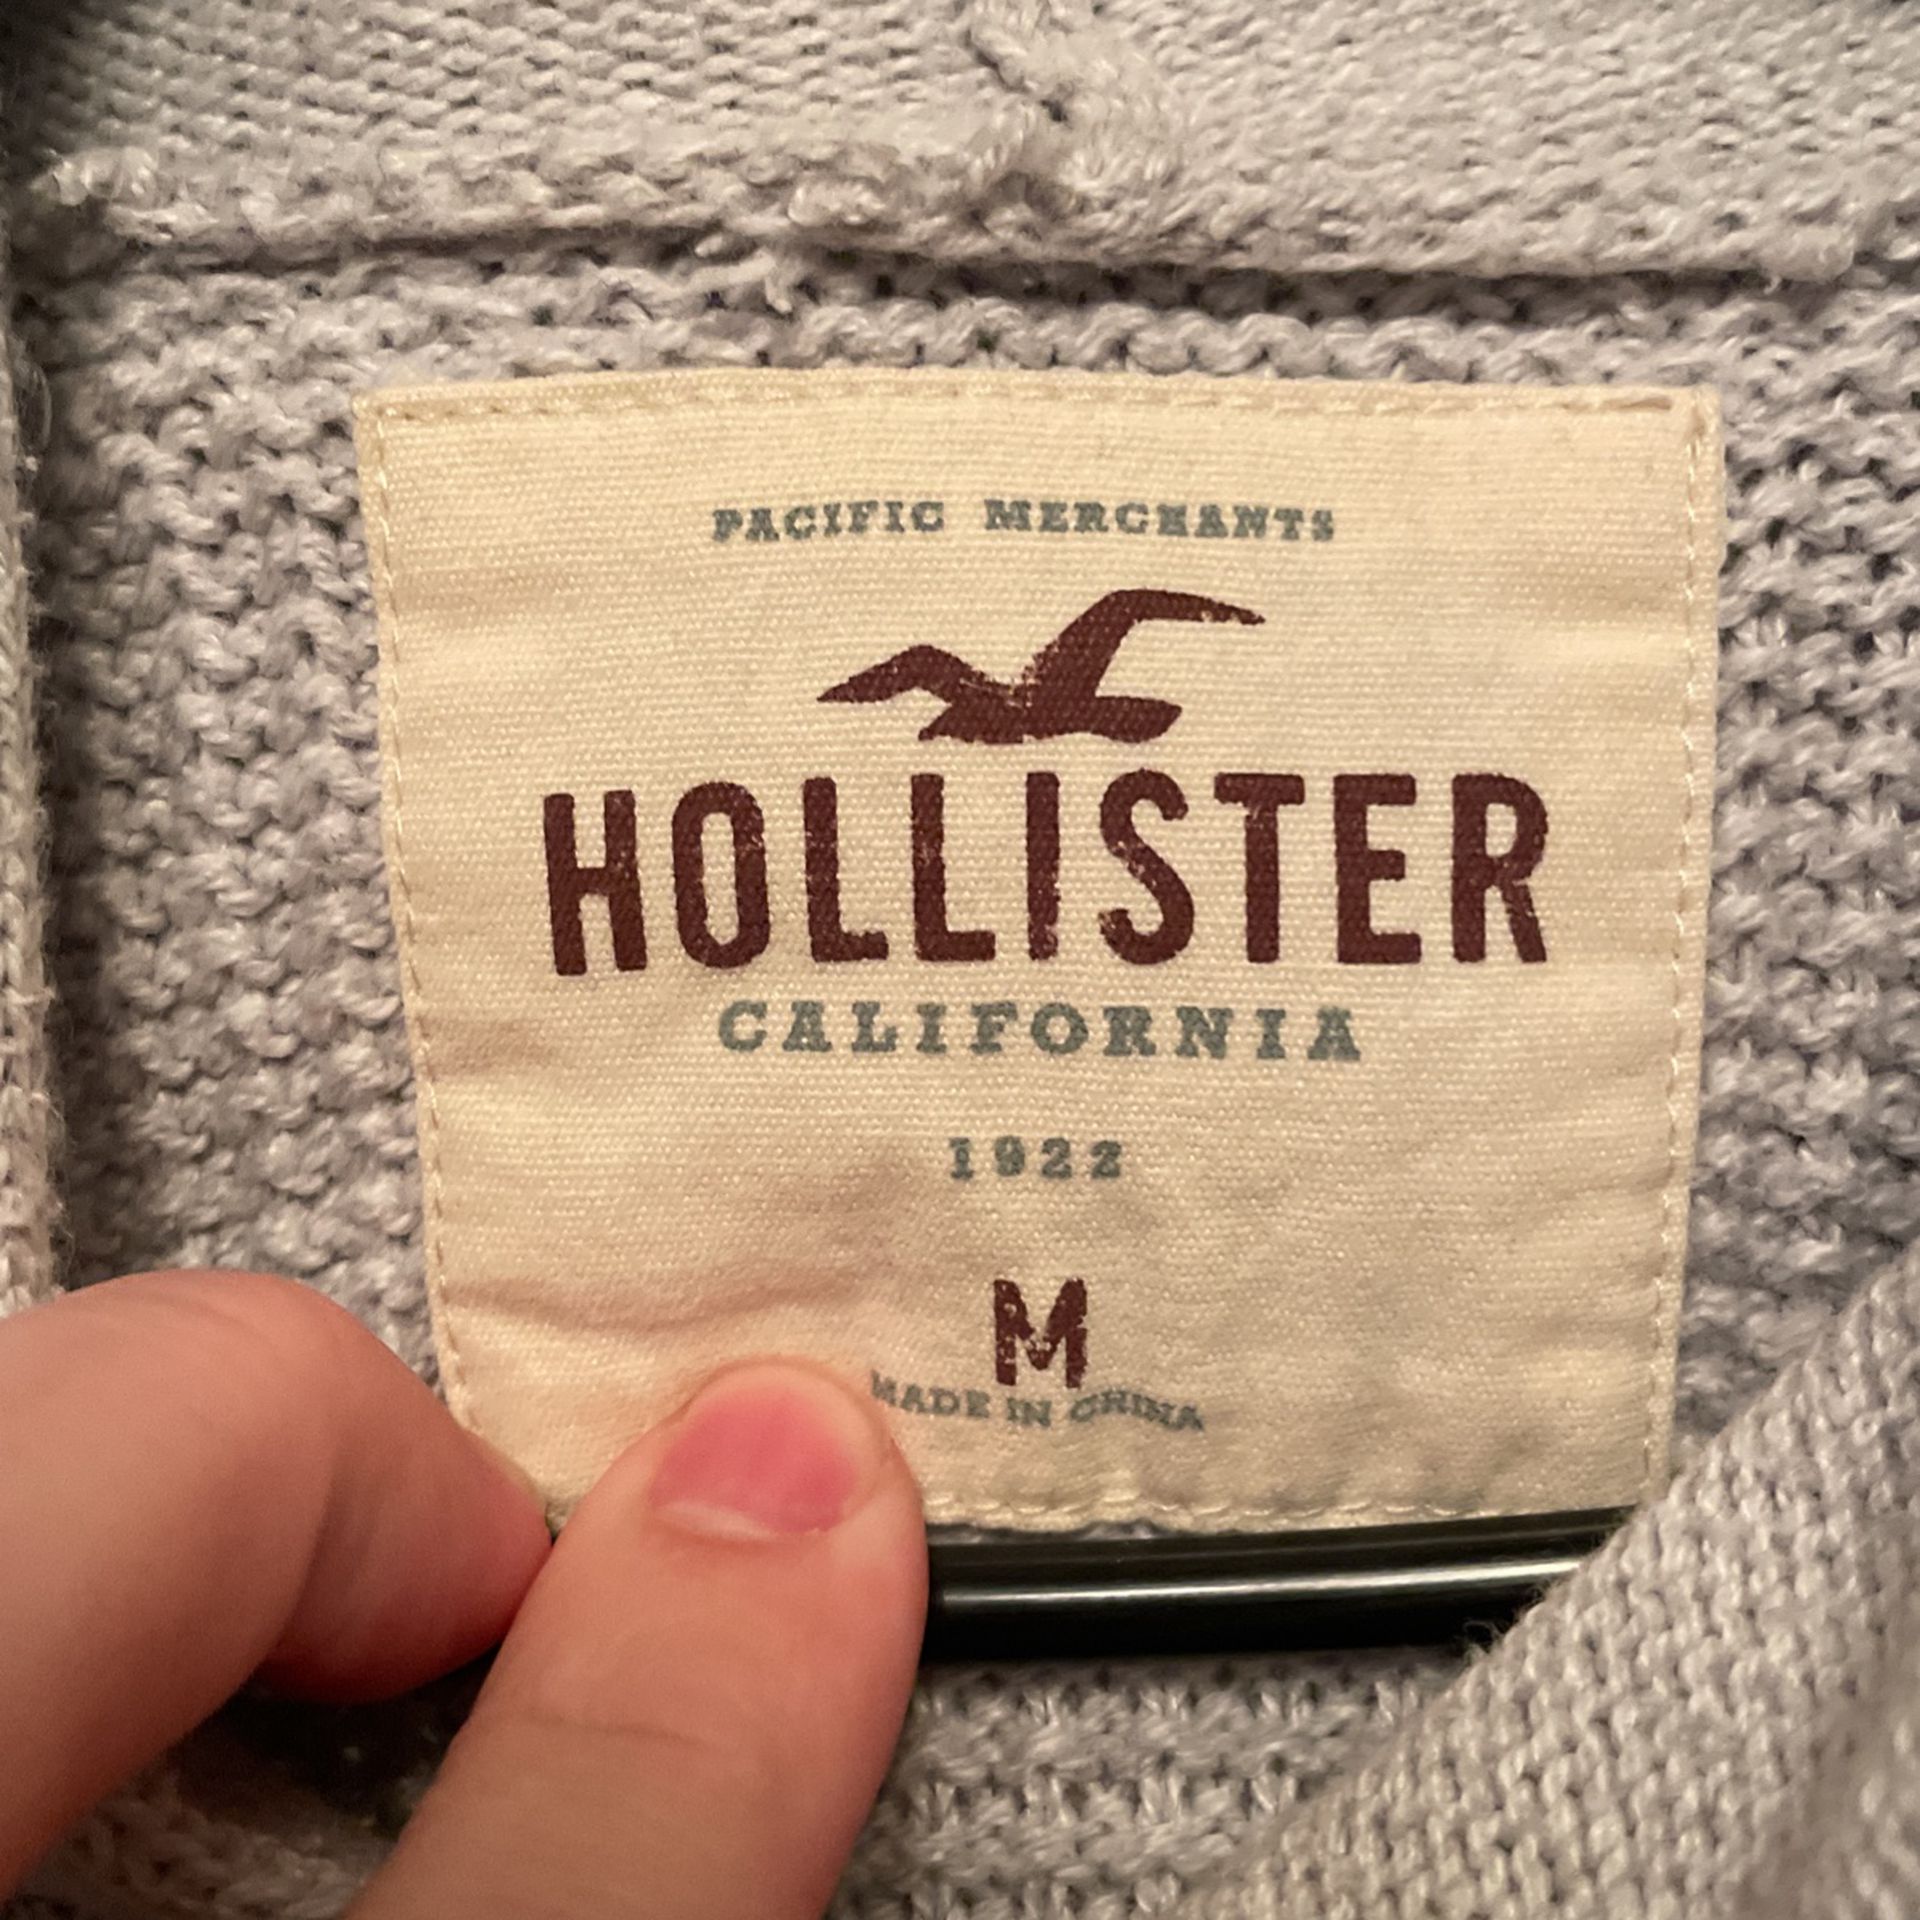 Hollister Pullover Hoodie